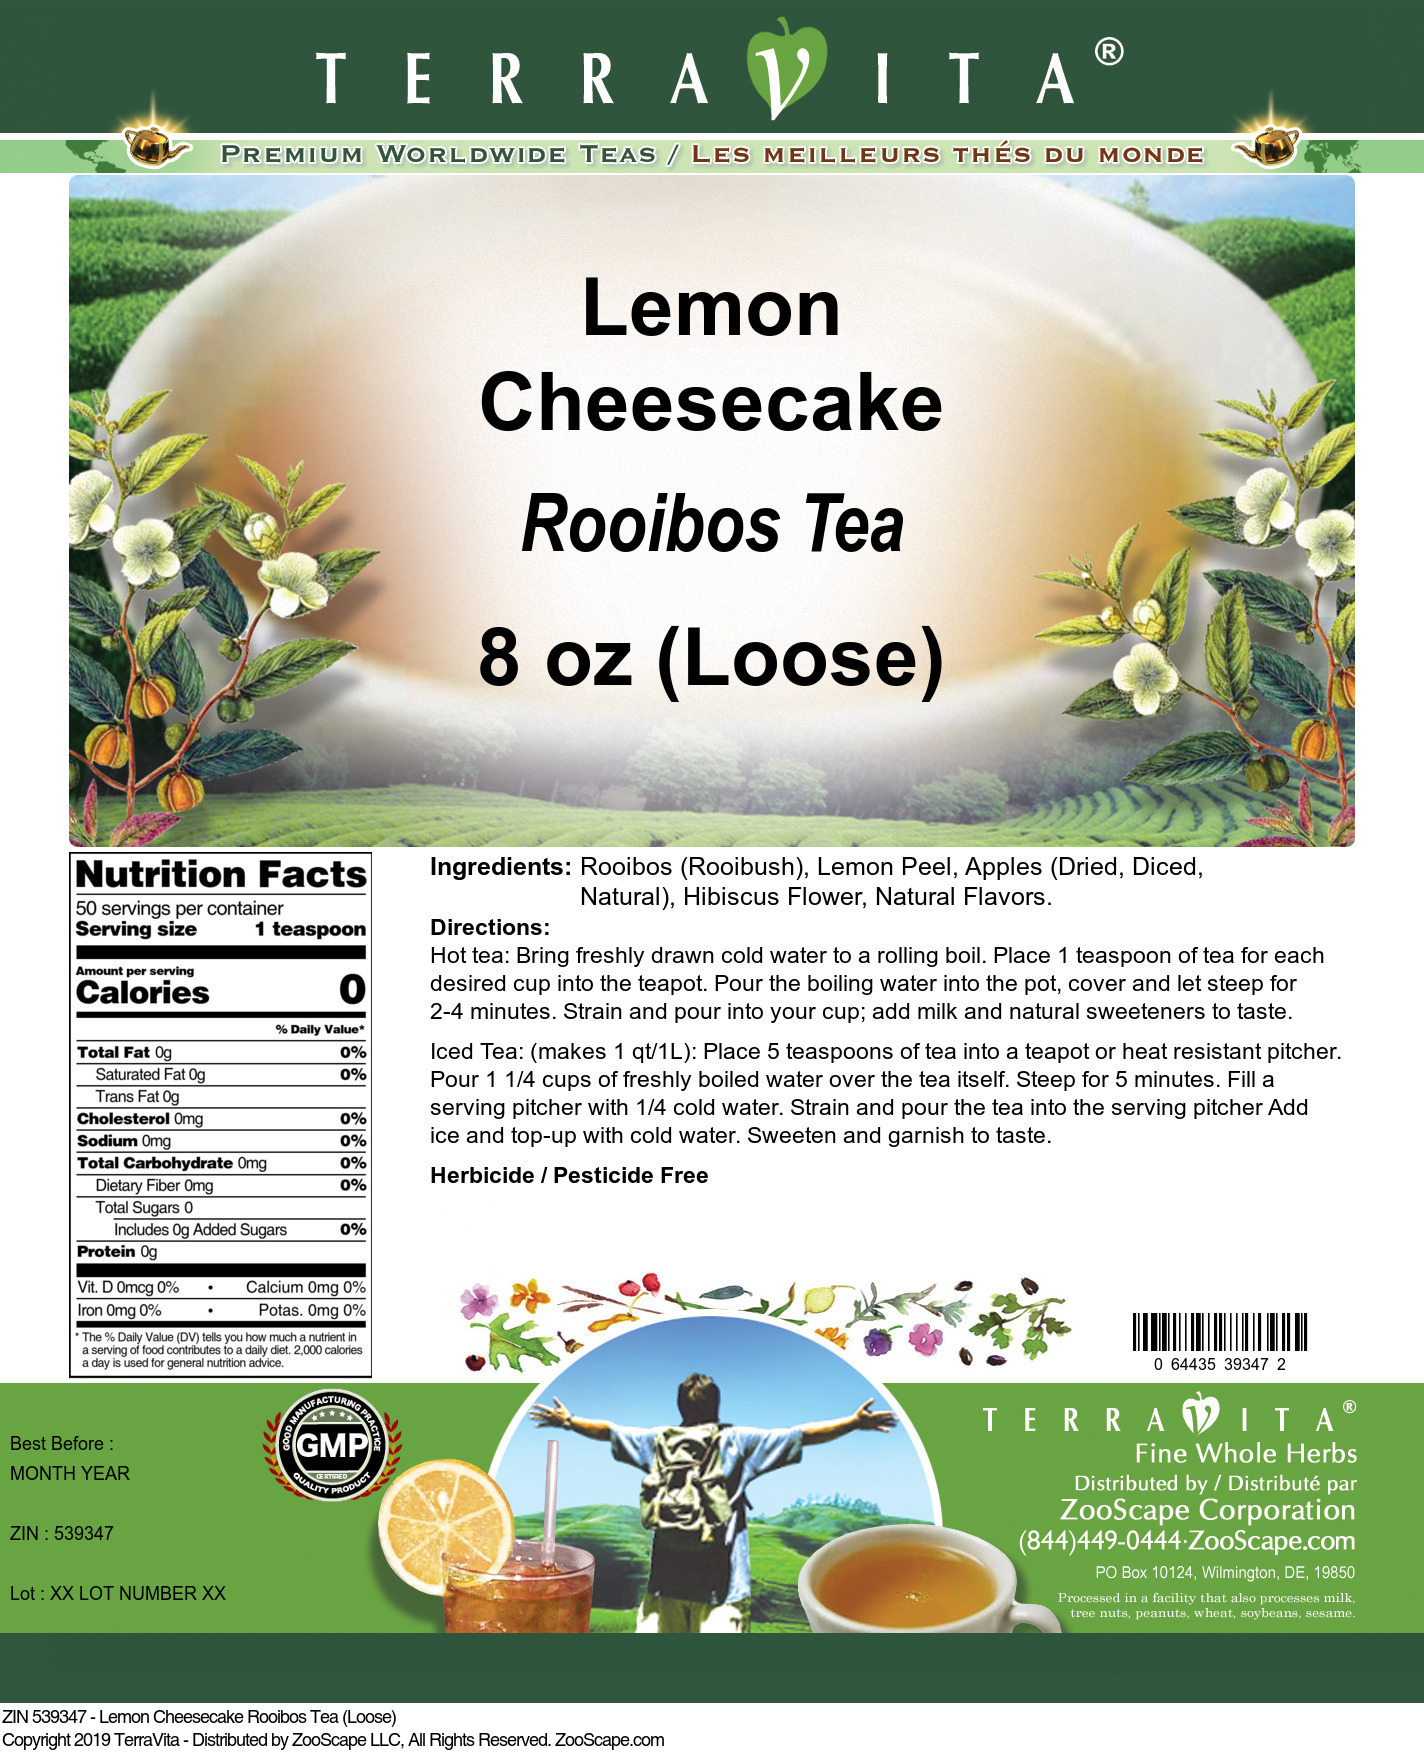 Lemon Cheesecake Rooibos Tea (Loose) - Label